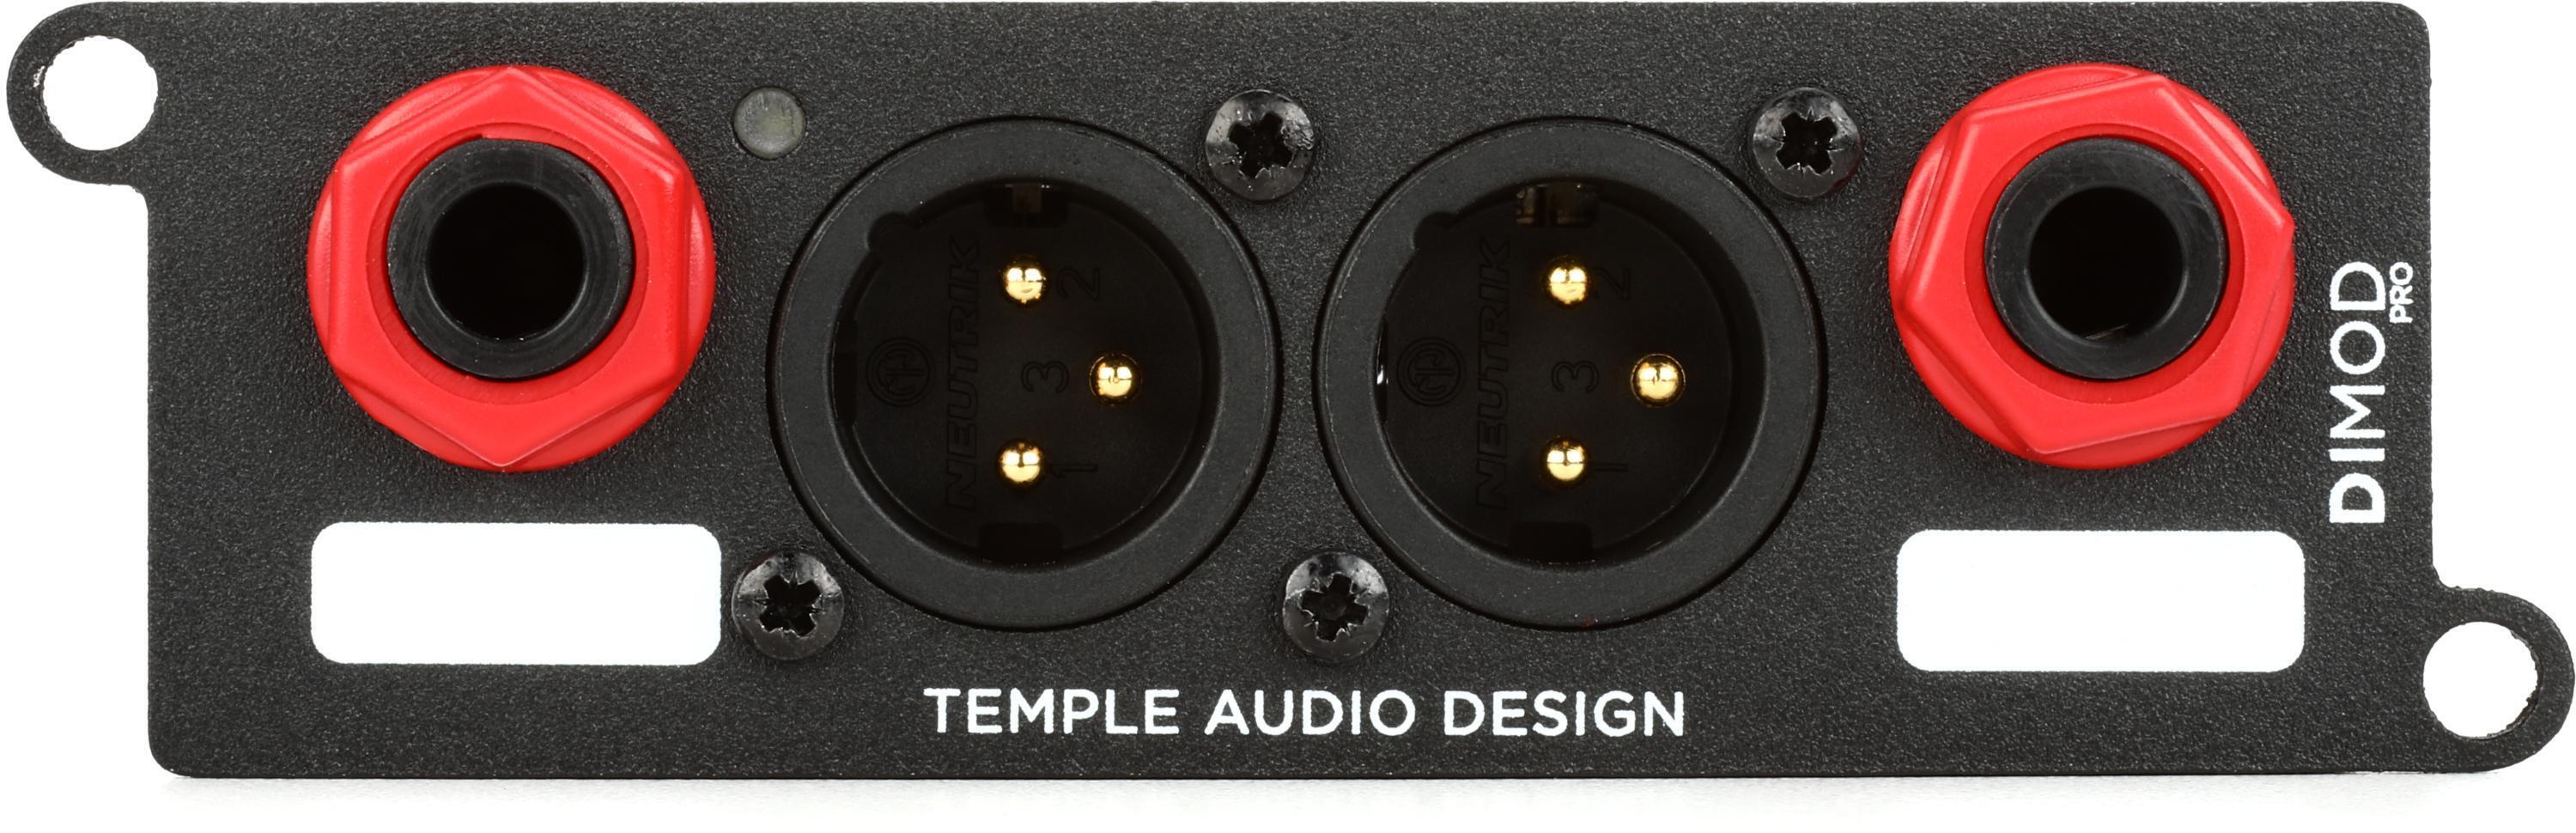 Temple of audio